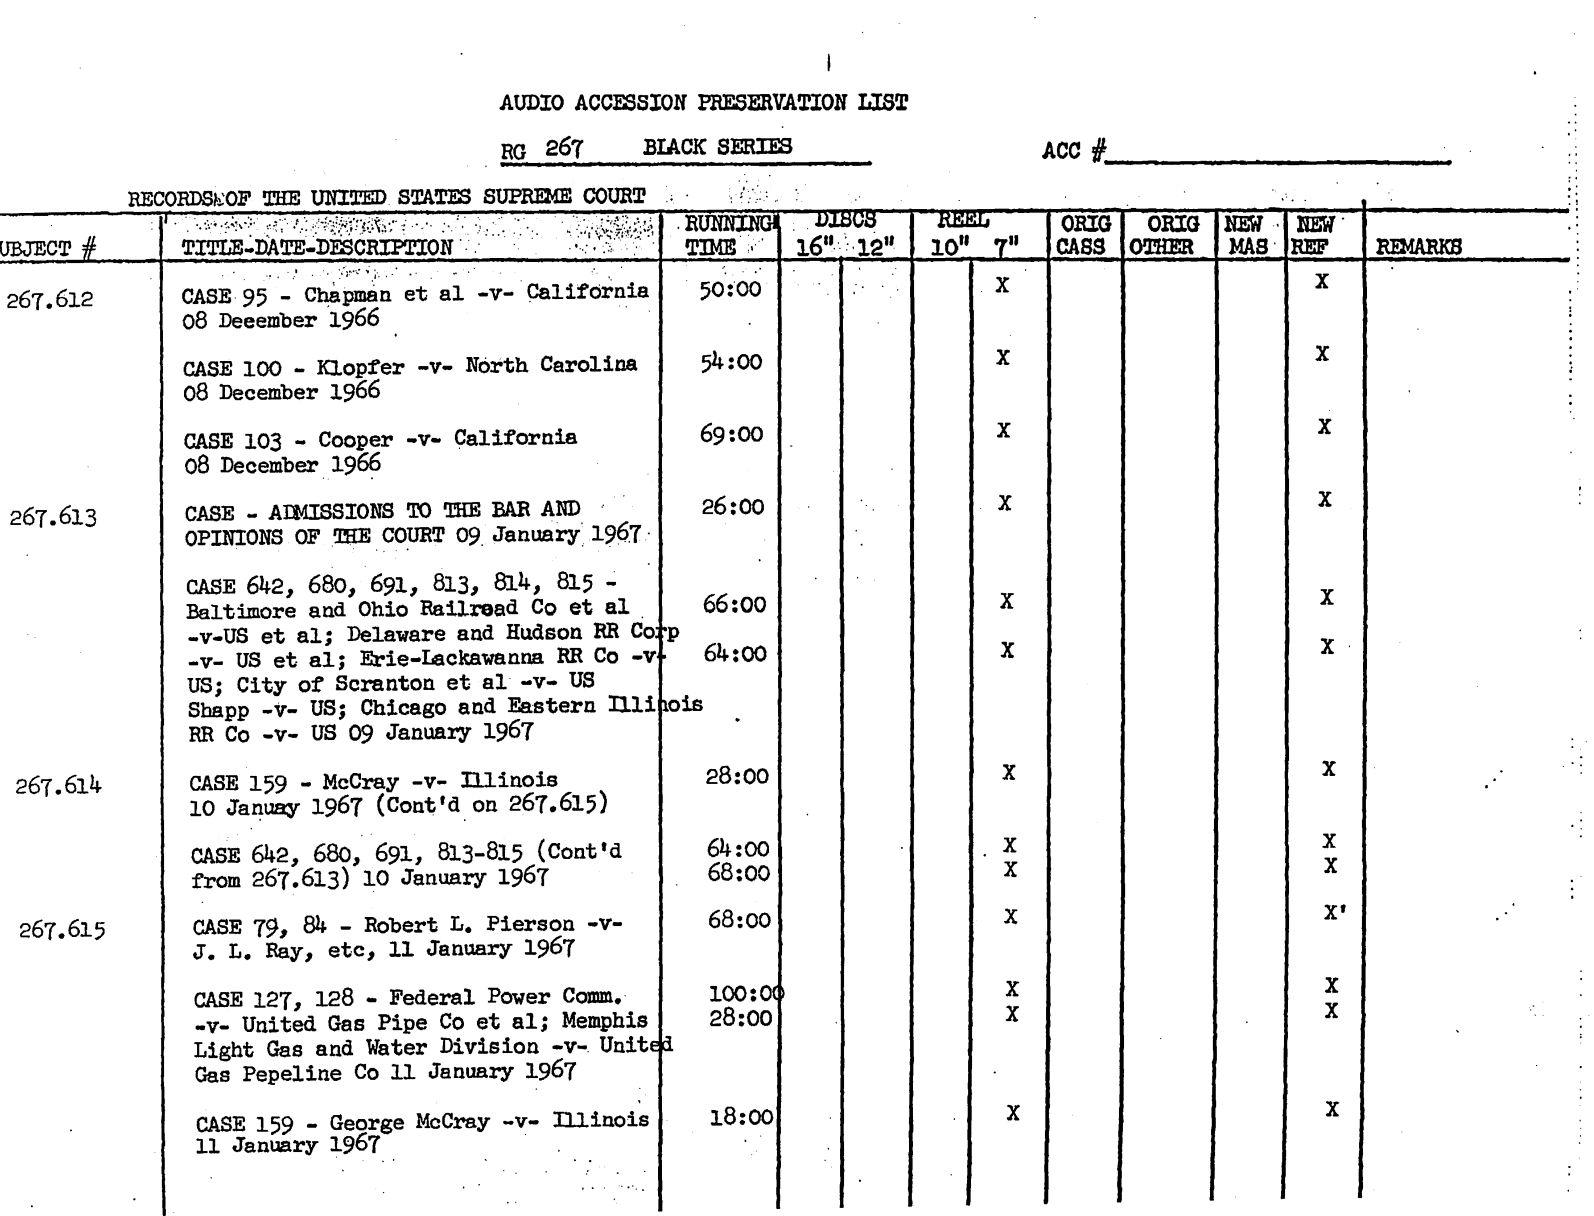 1966 Supreme Court Audio Accession List - Page 7